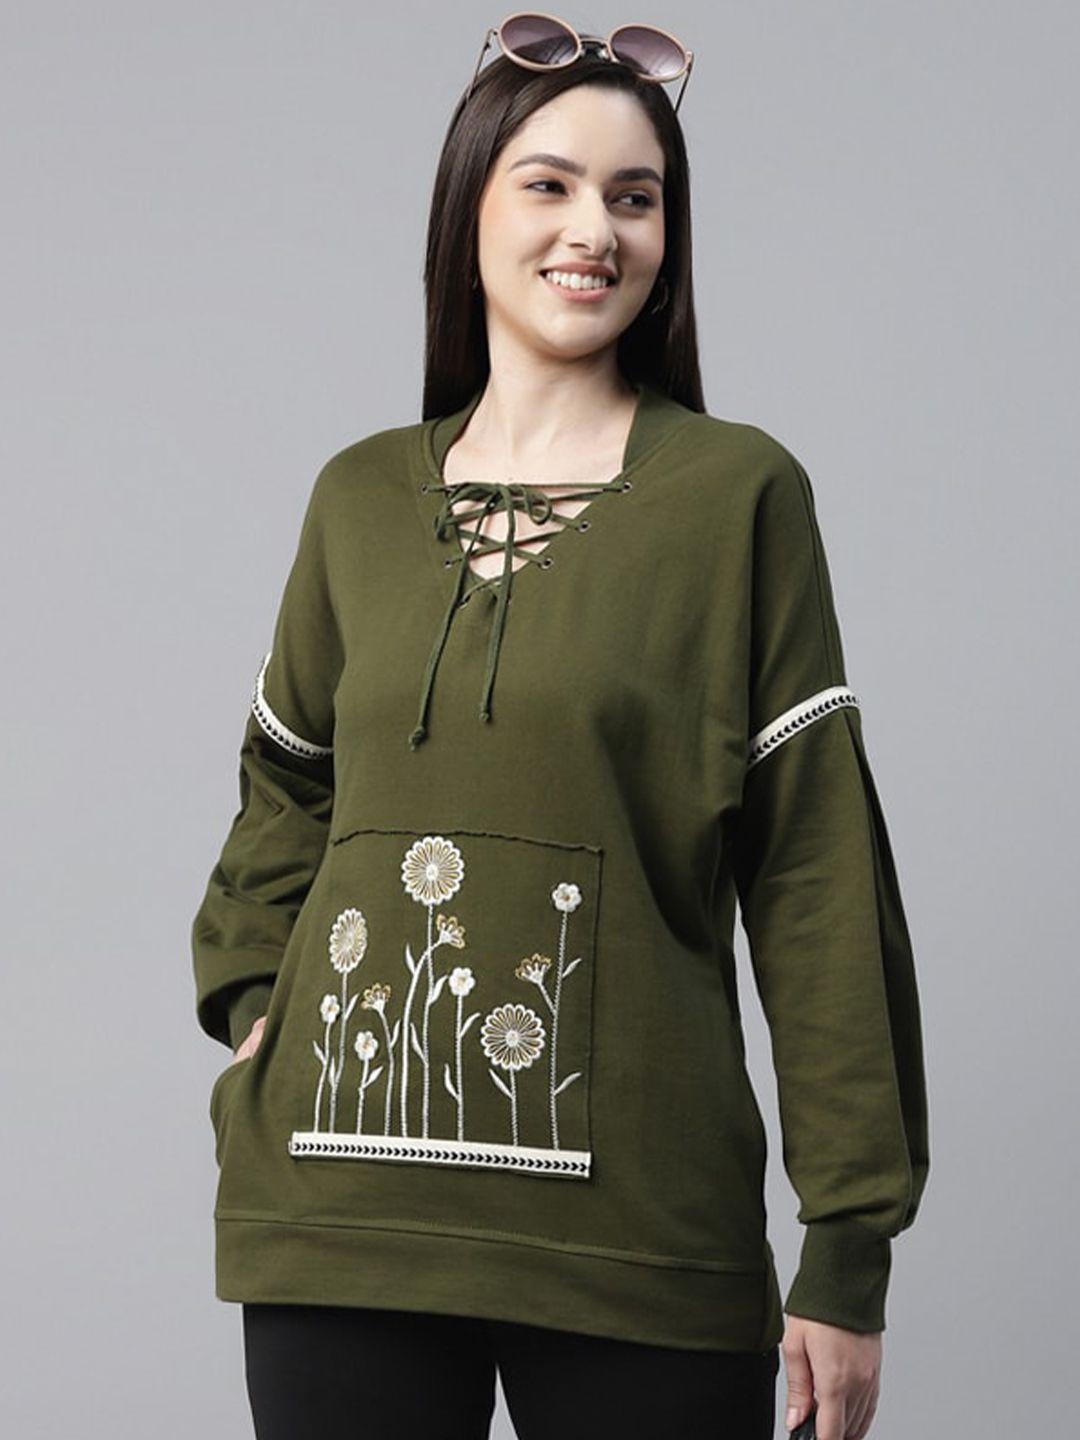 taurus women olive green embroidered sweatshirt